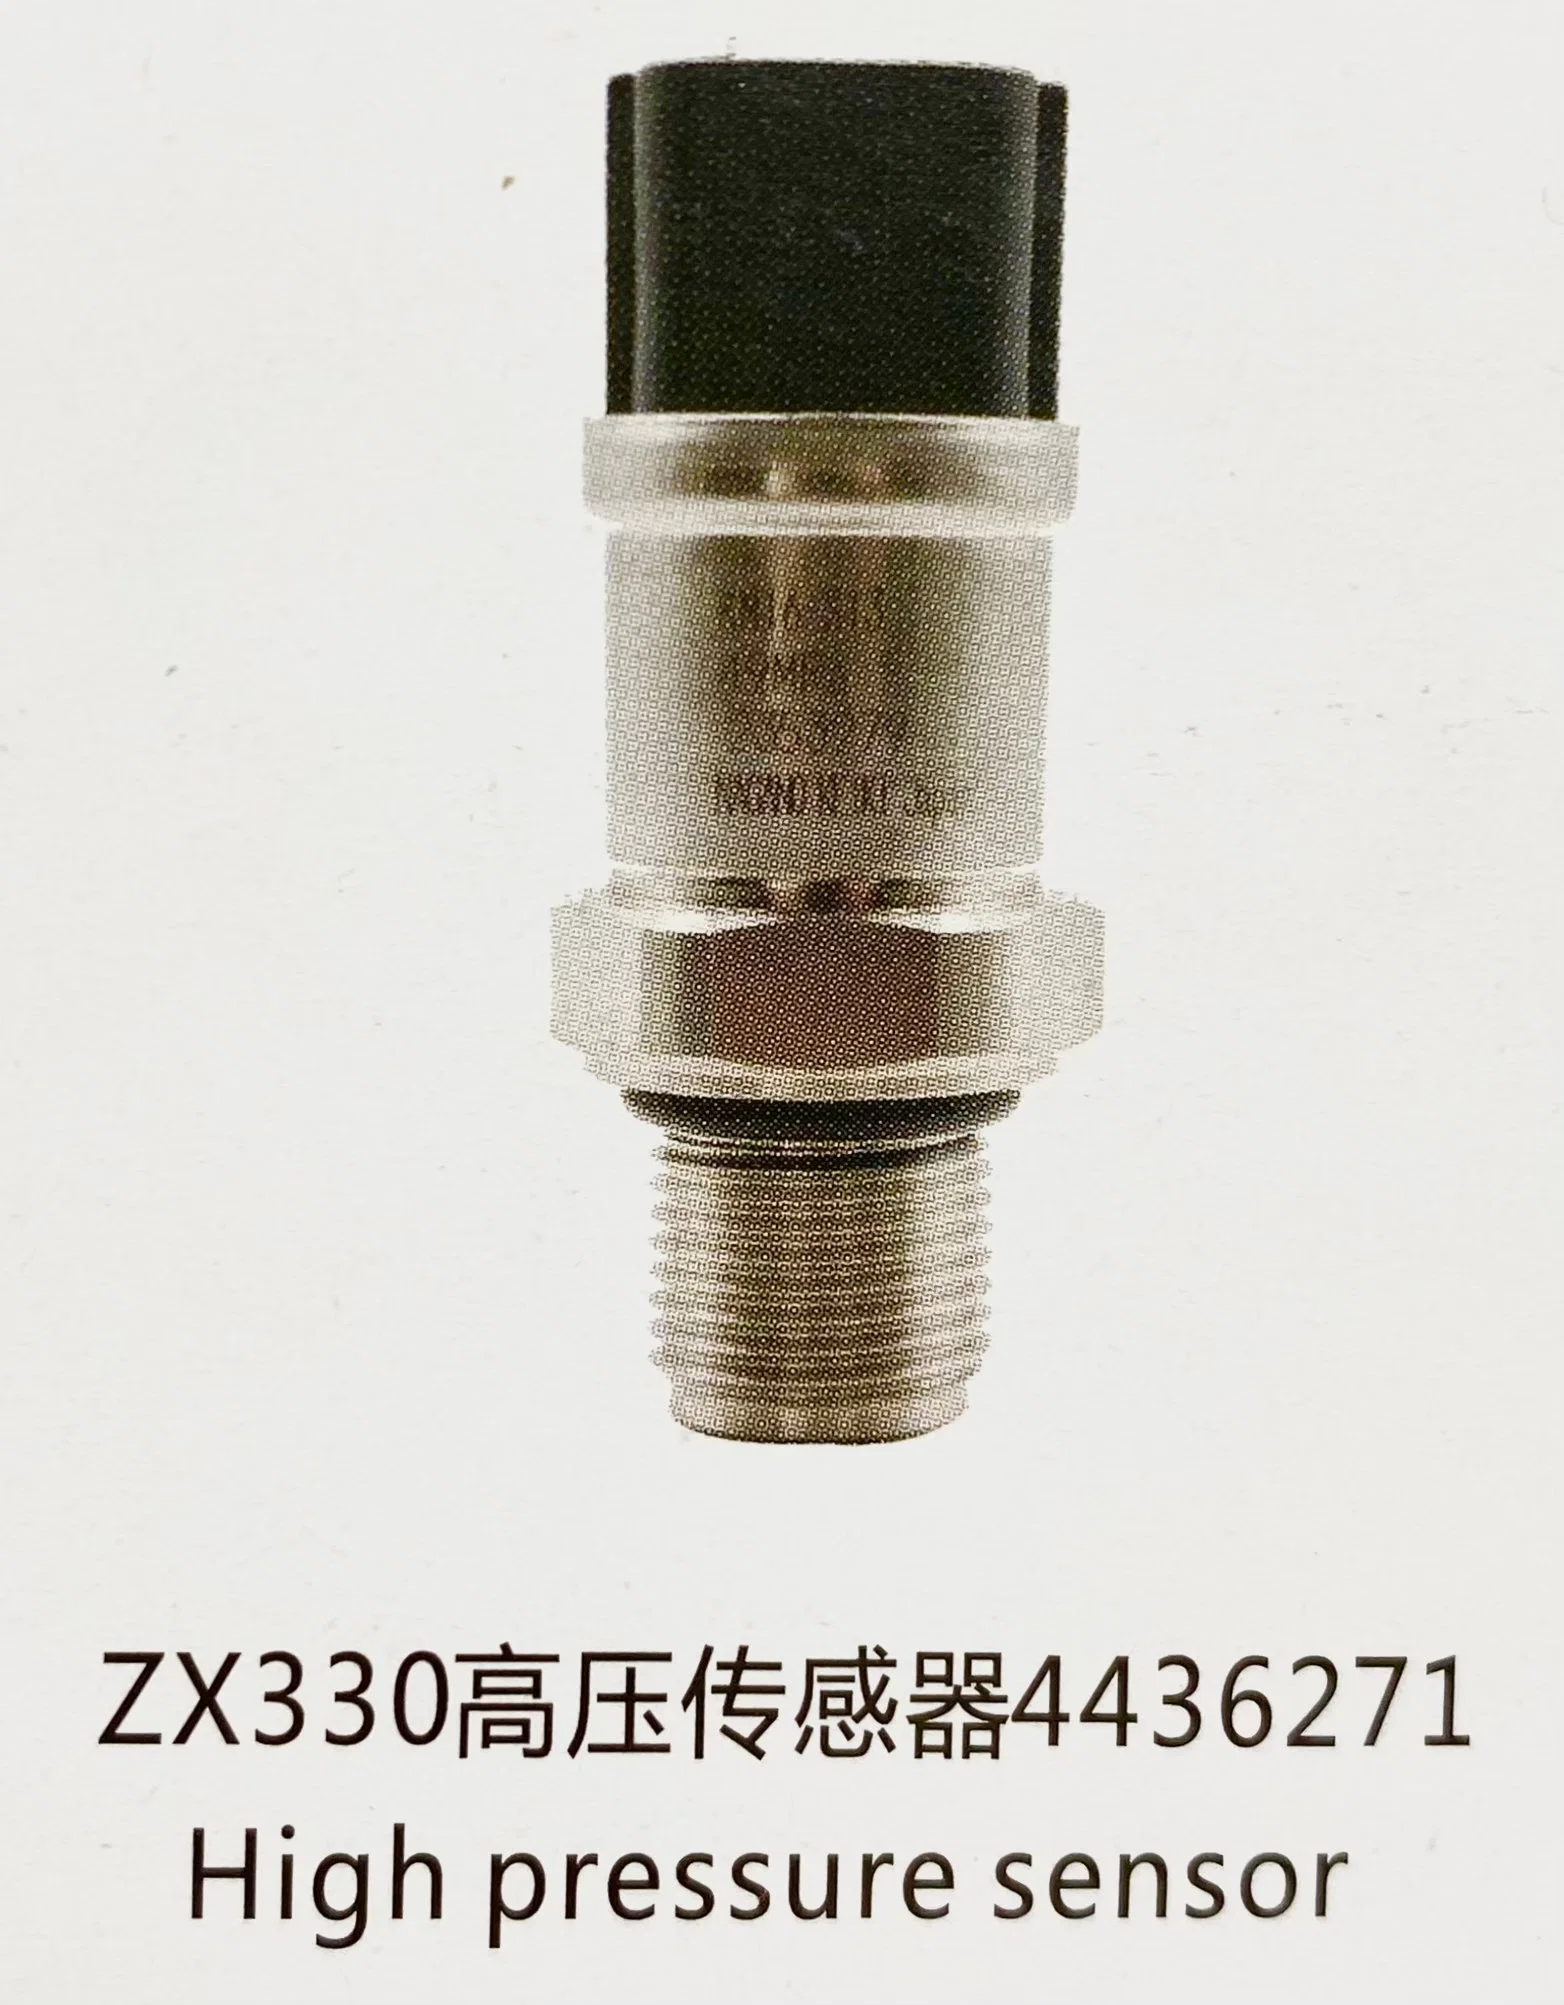 Zx330 High Pressure Sensor 4436271 Excavator Accessories Manufacturers Direct Sales